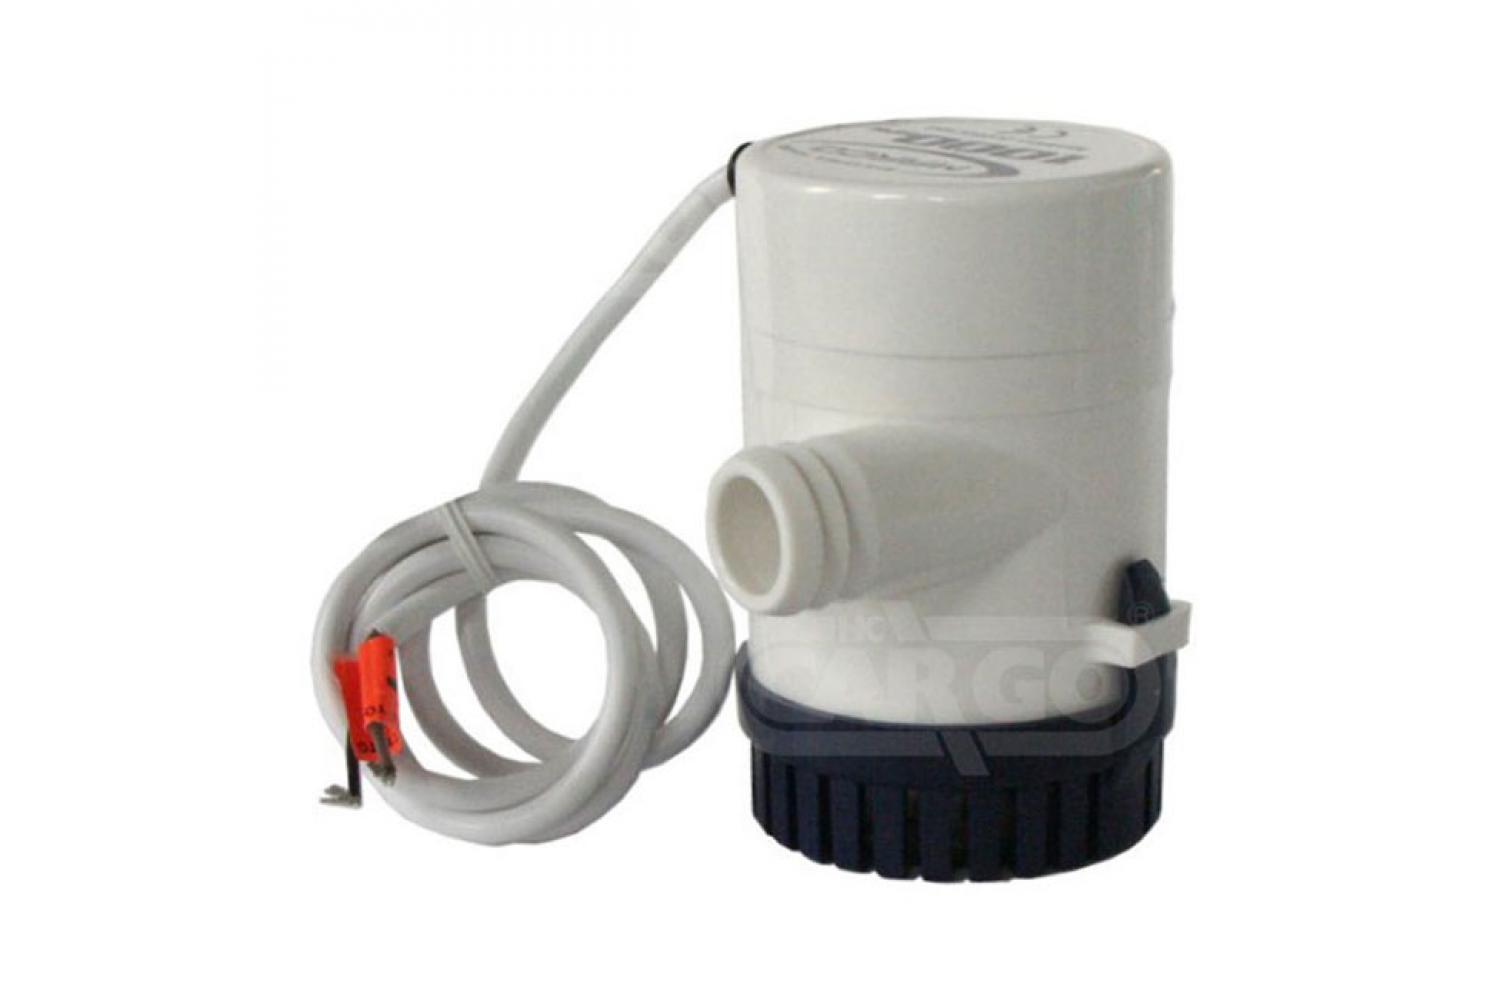 Handwasserpumpe Lenzpumpe - 4 m Förderhöhe - 45 l/min Durchflussmenge -  Kunststoffgriff